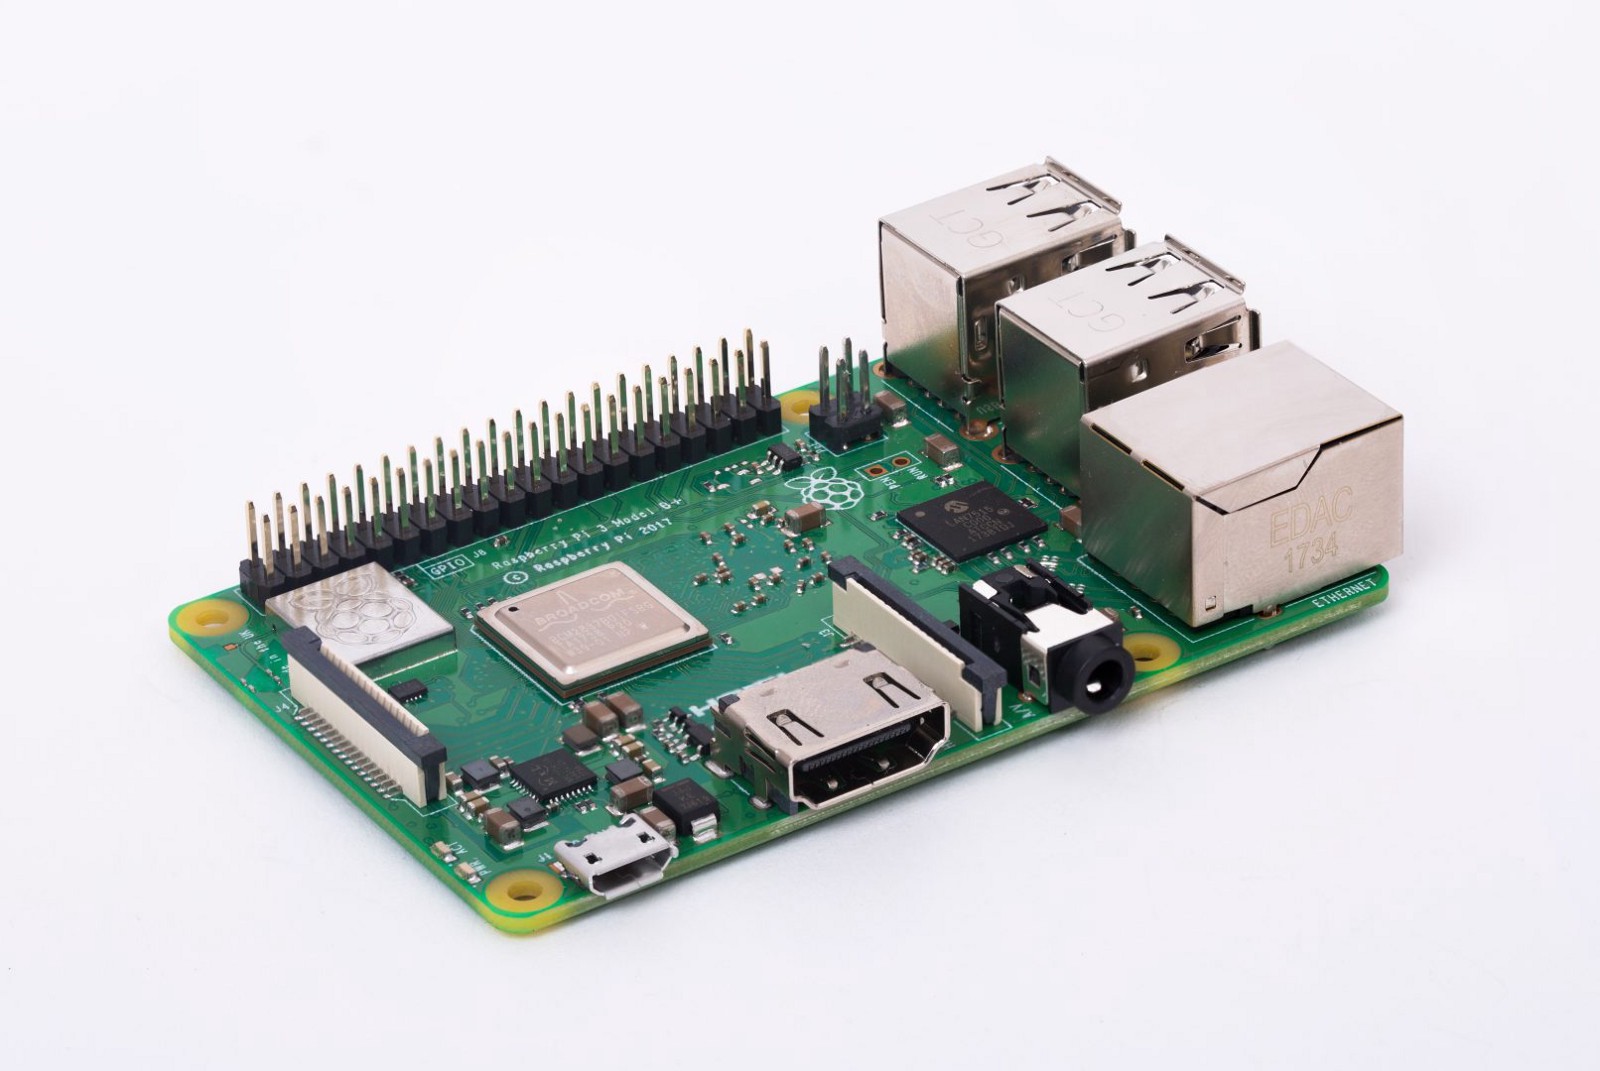 Modelo de Raspberry Pi con cuatro puertos USB